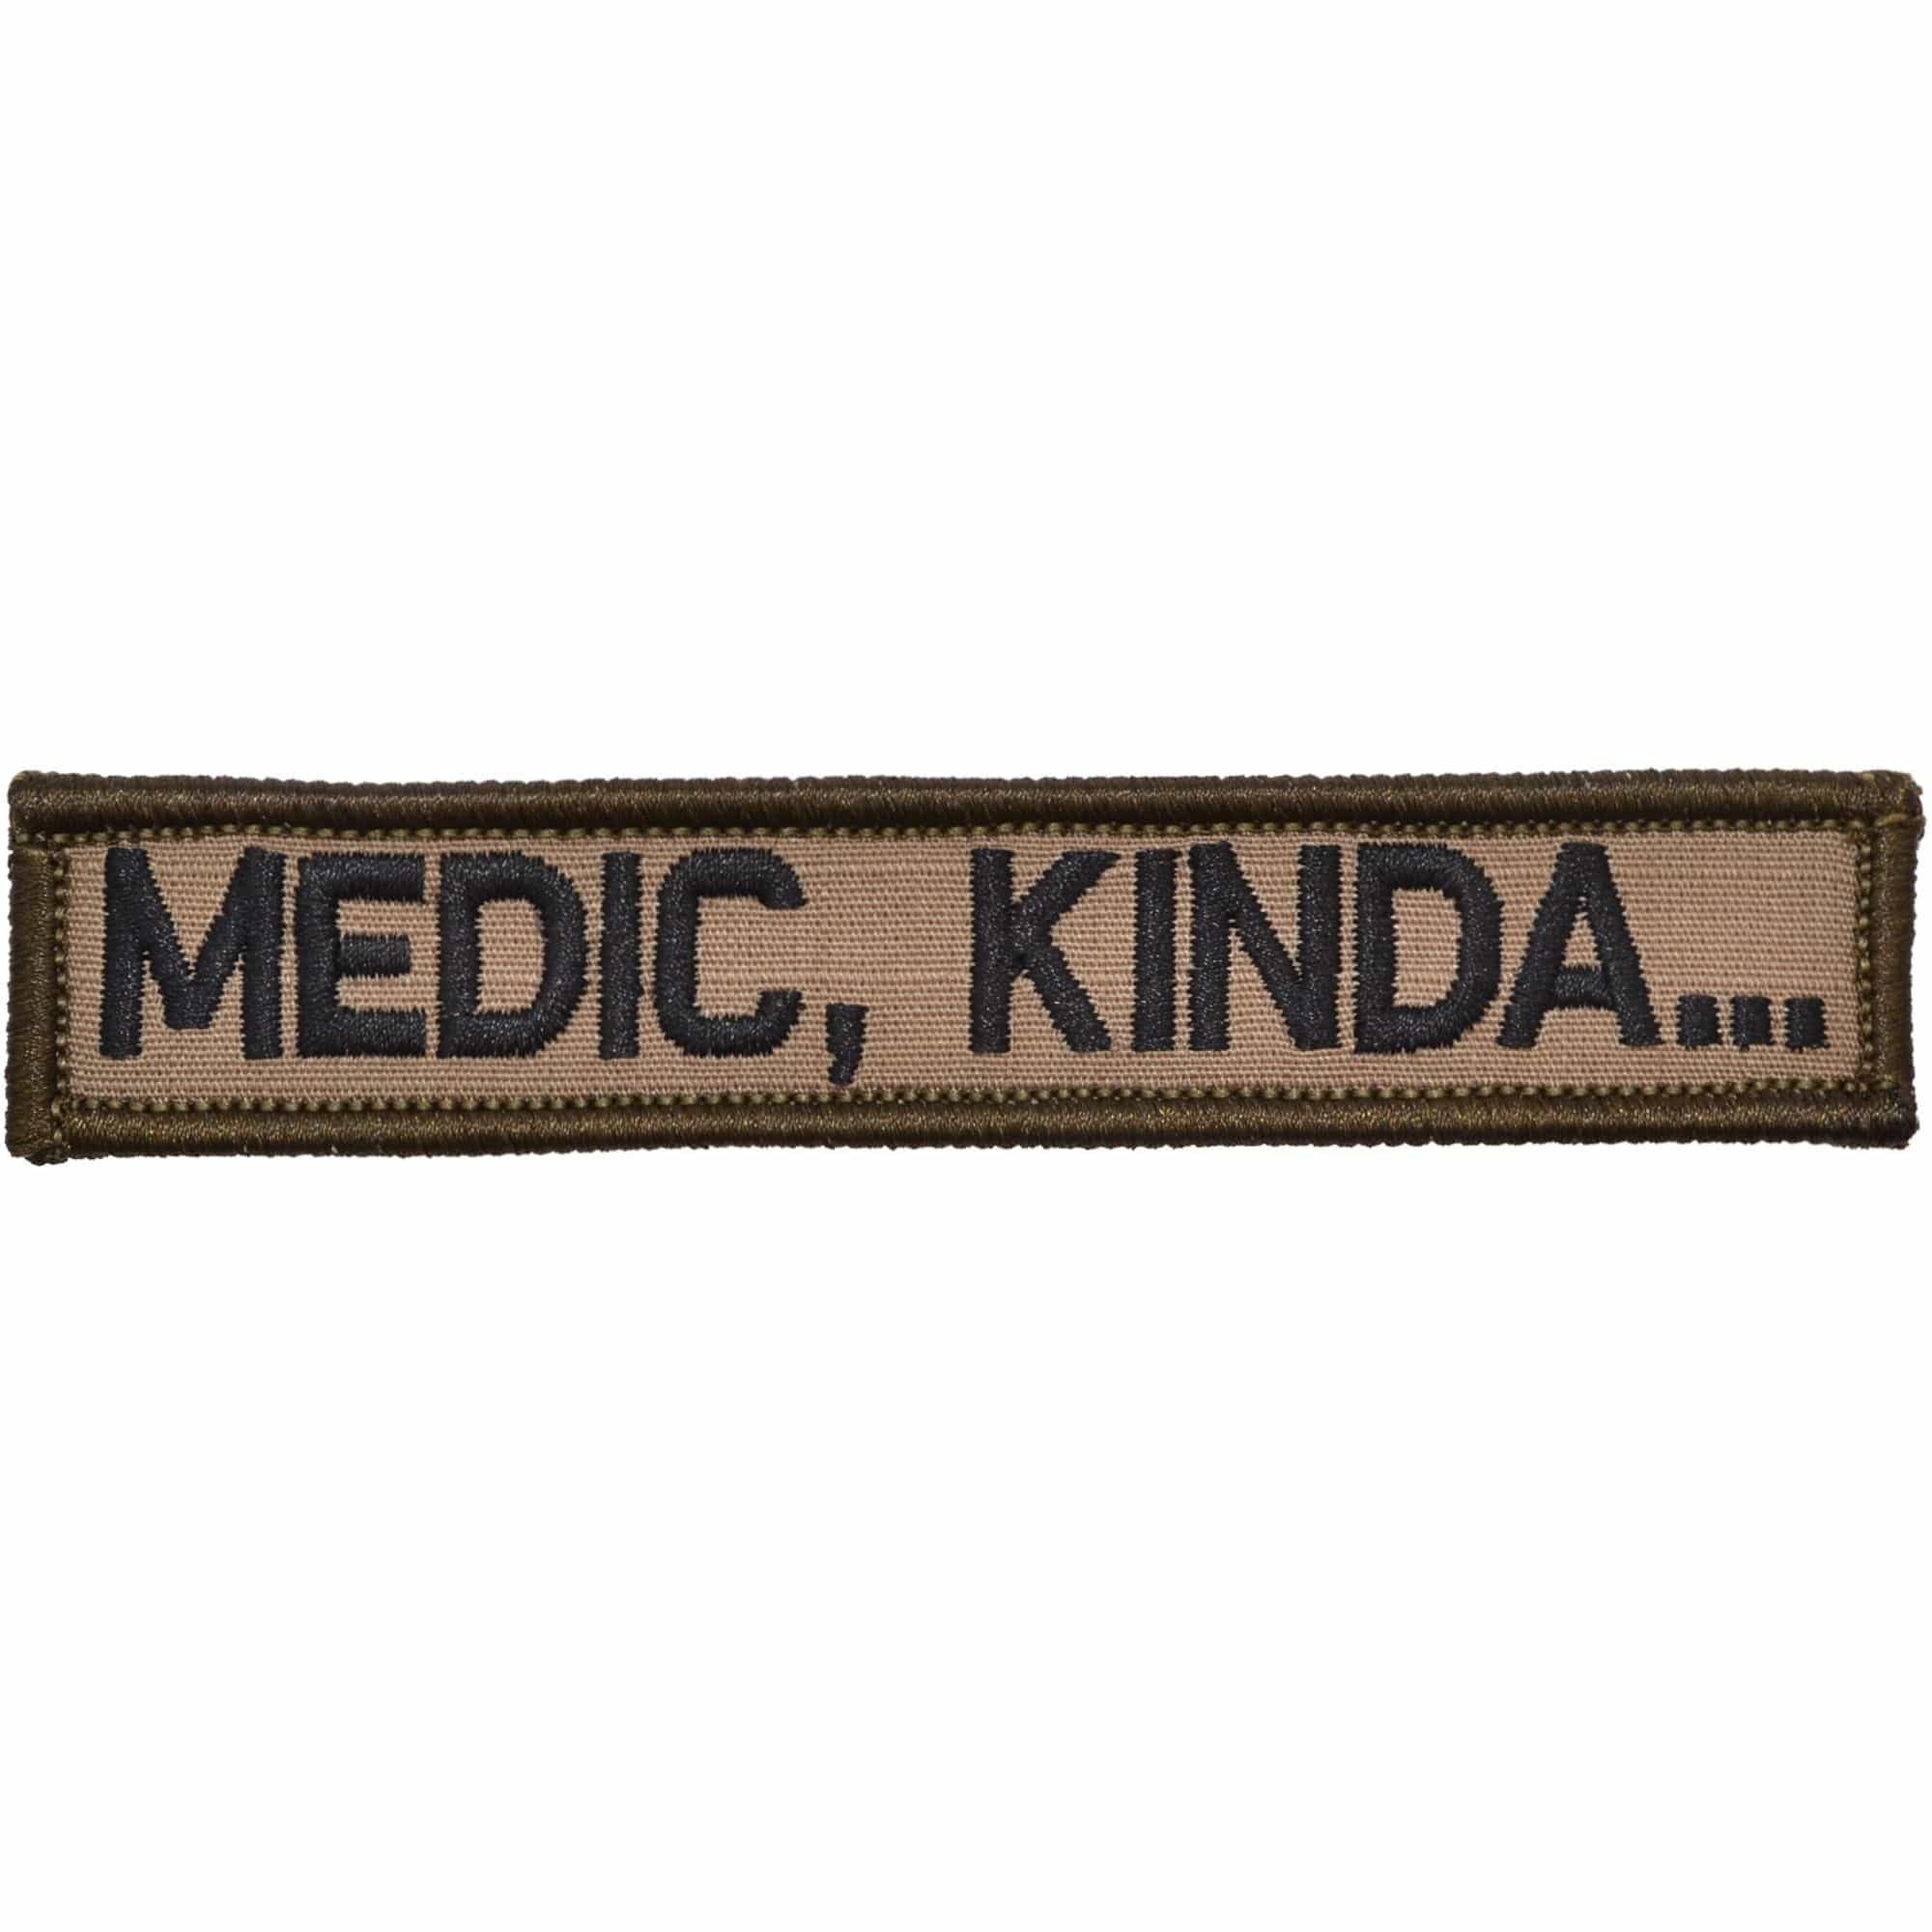 Medic, Kinda - 1x5 Patch Black | Tactical Gear Junkie